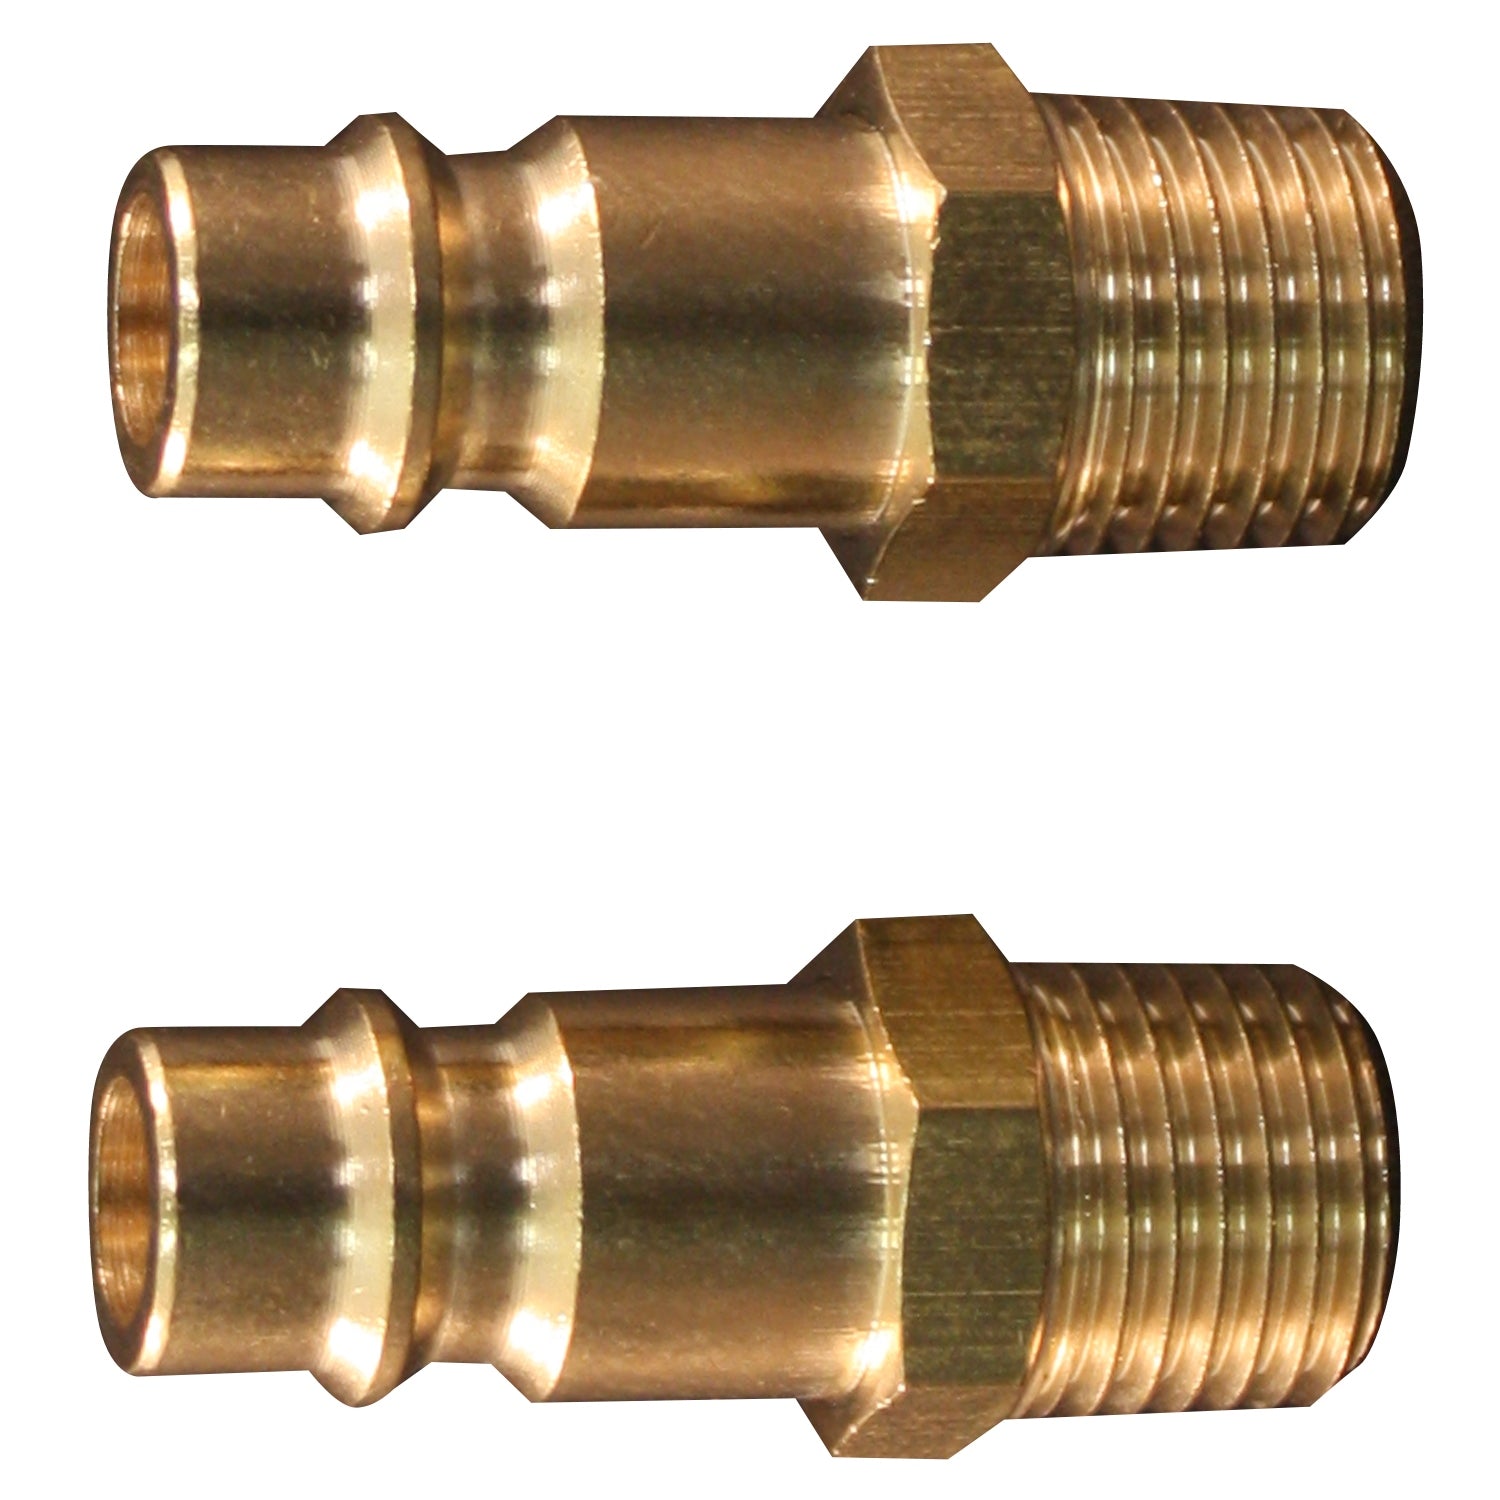 HIGHFLOWPRO® V-Style/Euro Interchange Brass Air Plug Fitting (High Volume Low Pressure Application)